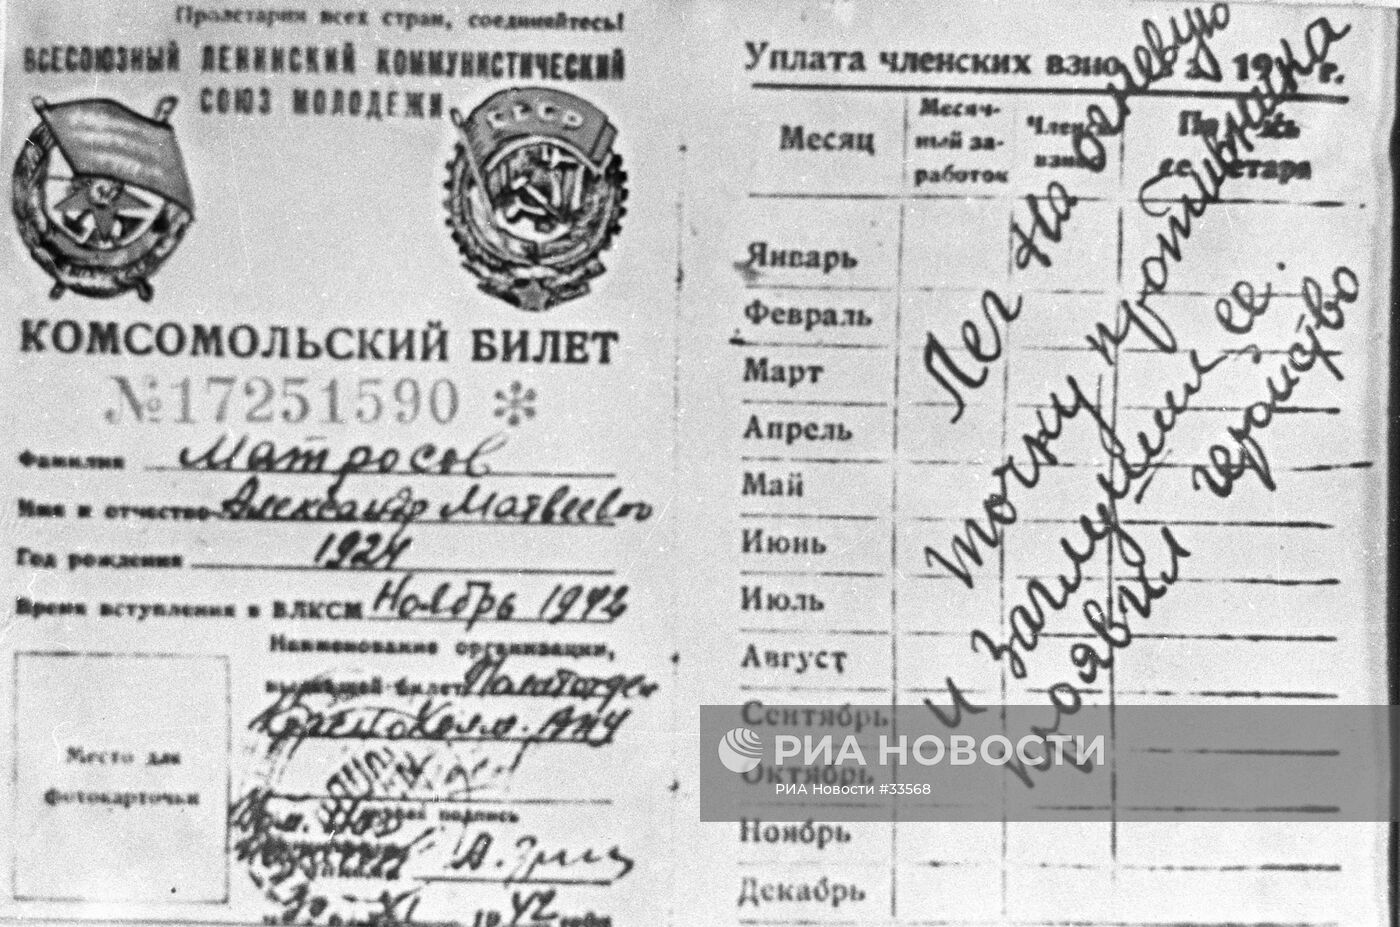 Комсомольский билет Александра Матросова